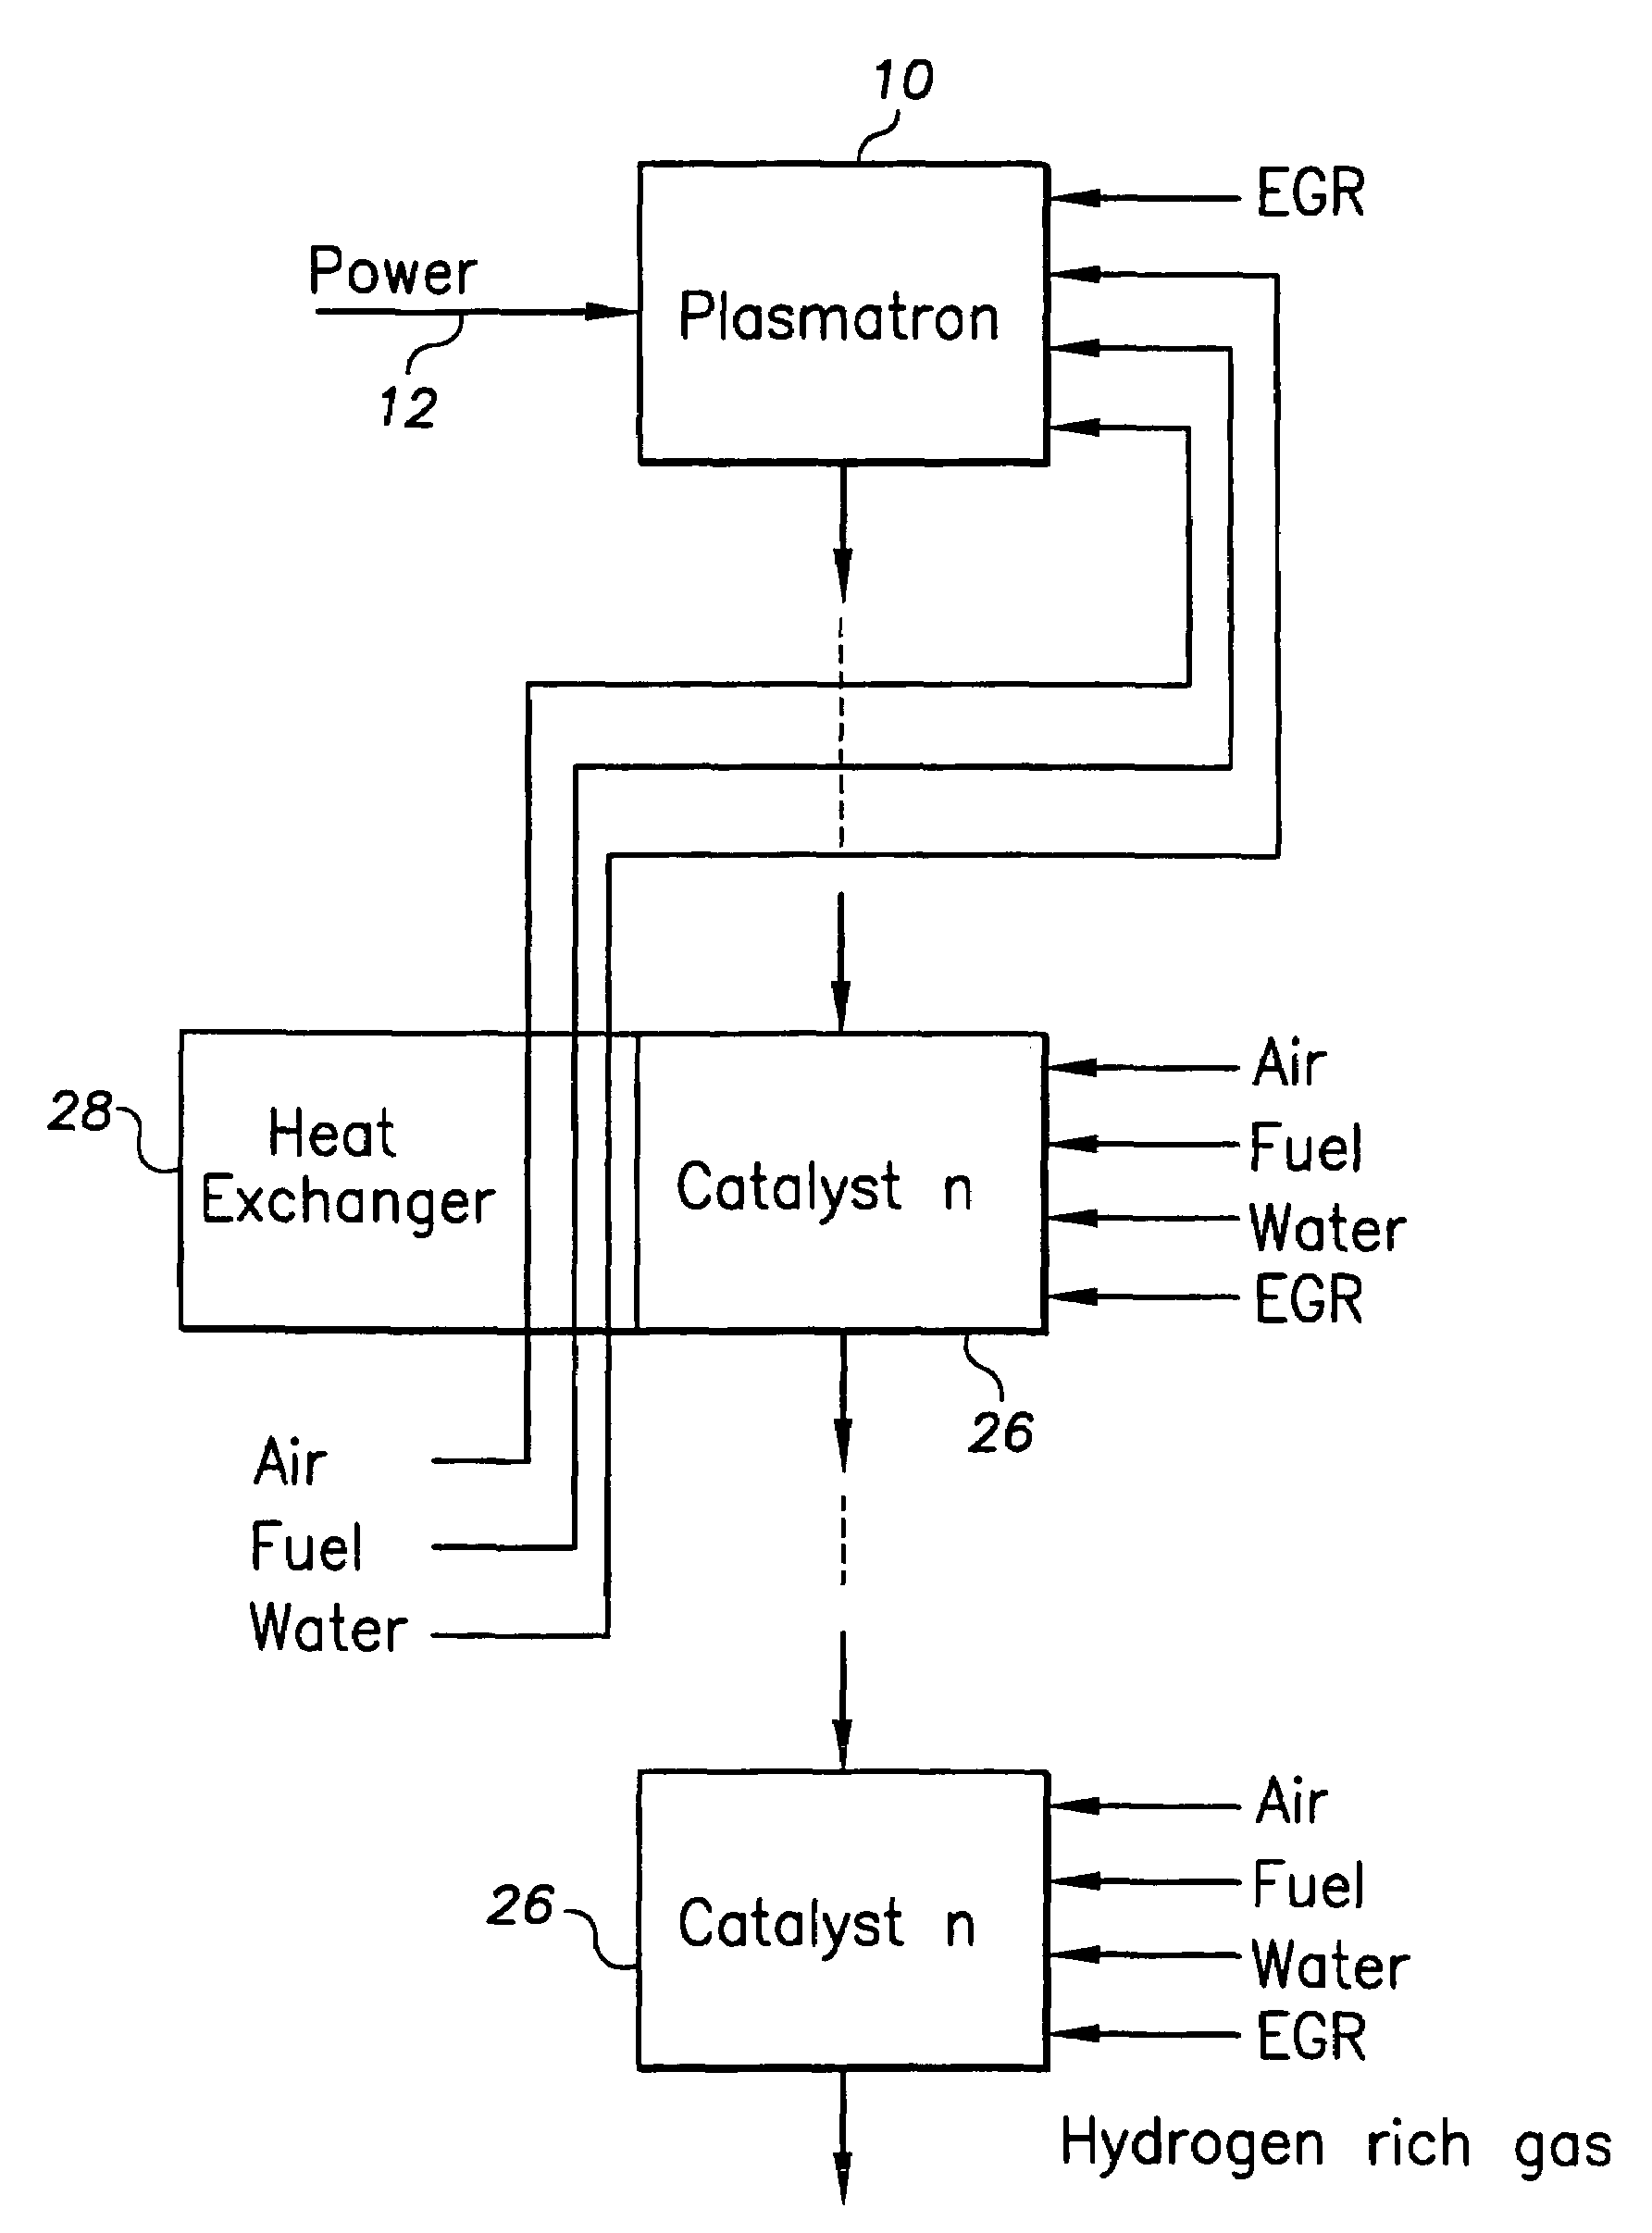 Plasmatron-catalyst system